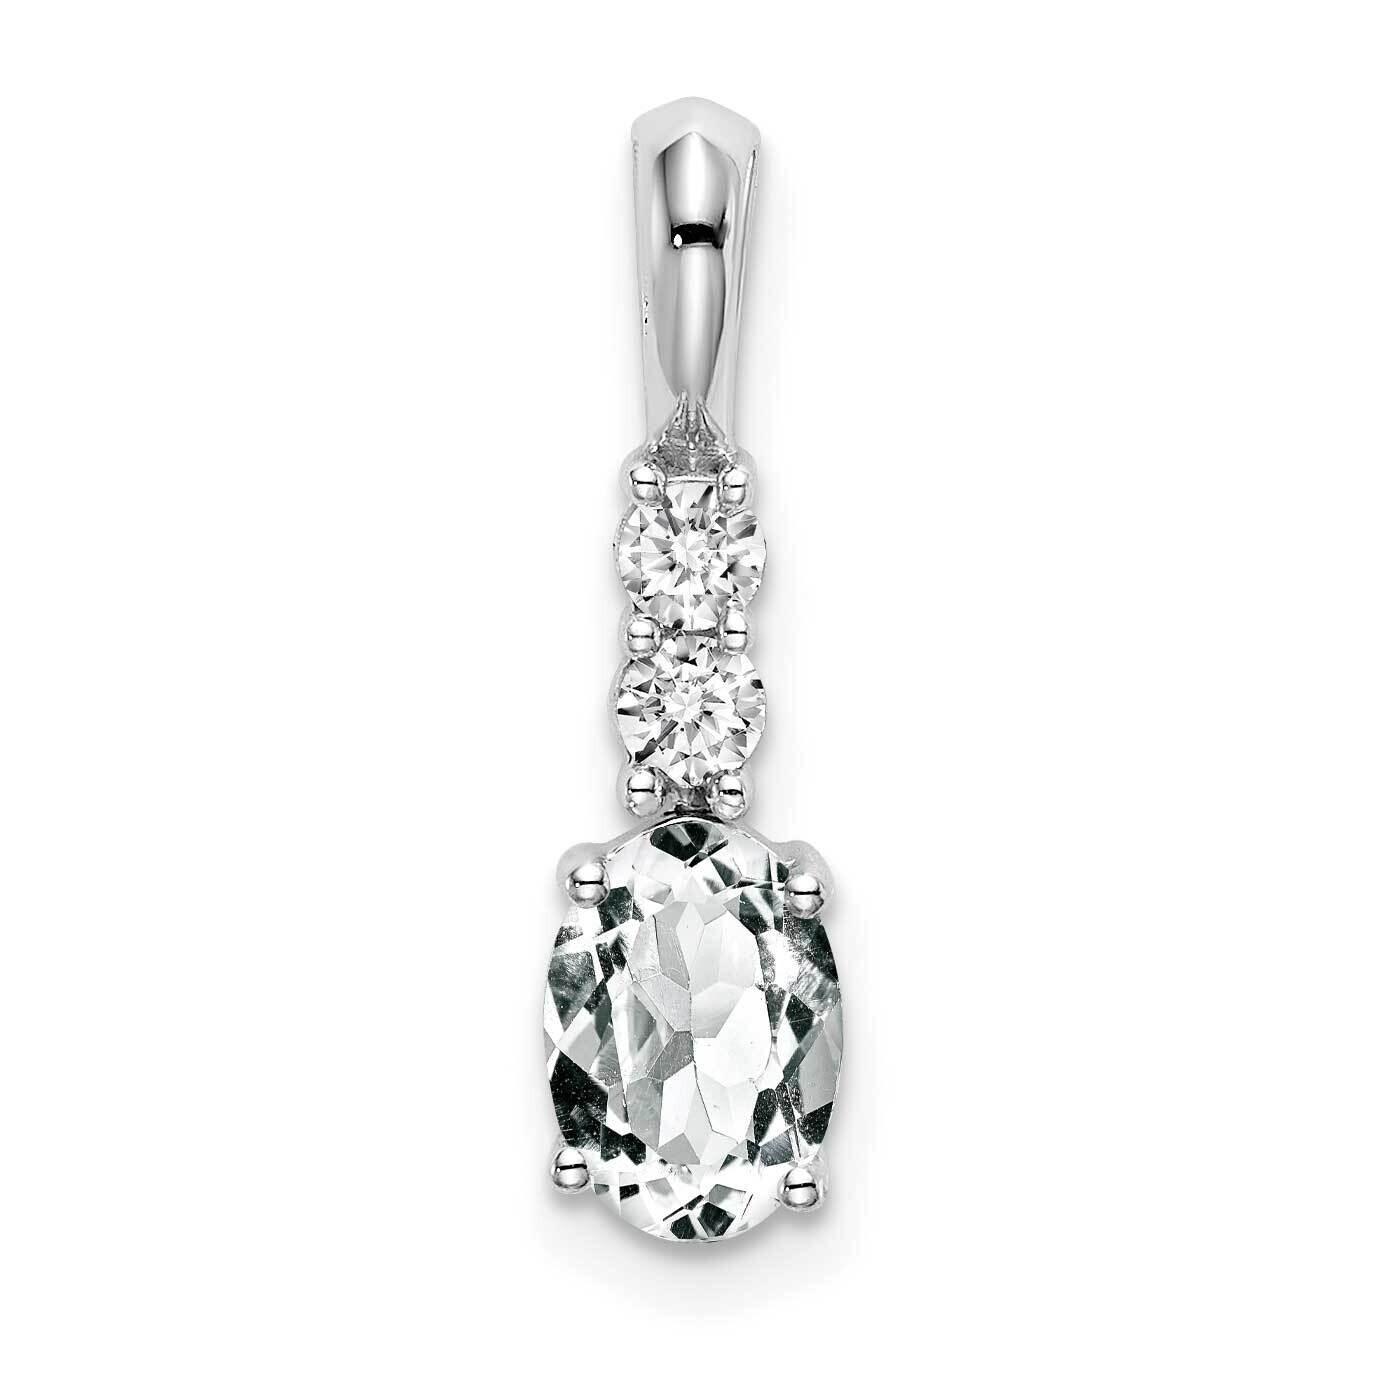 Oval White Topaz Diamond Pendant 14k White Gold PM7406-WT-013-WA